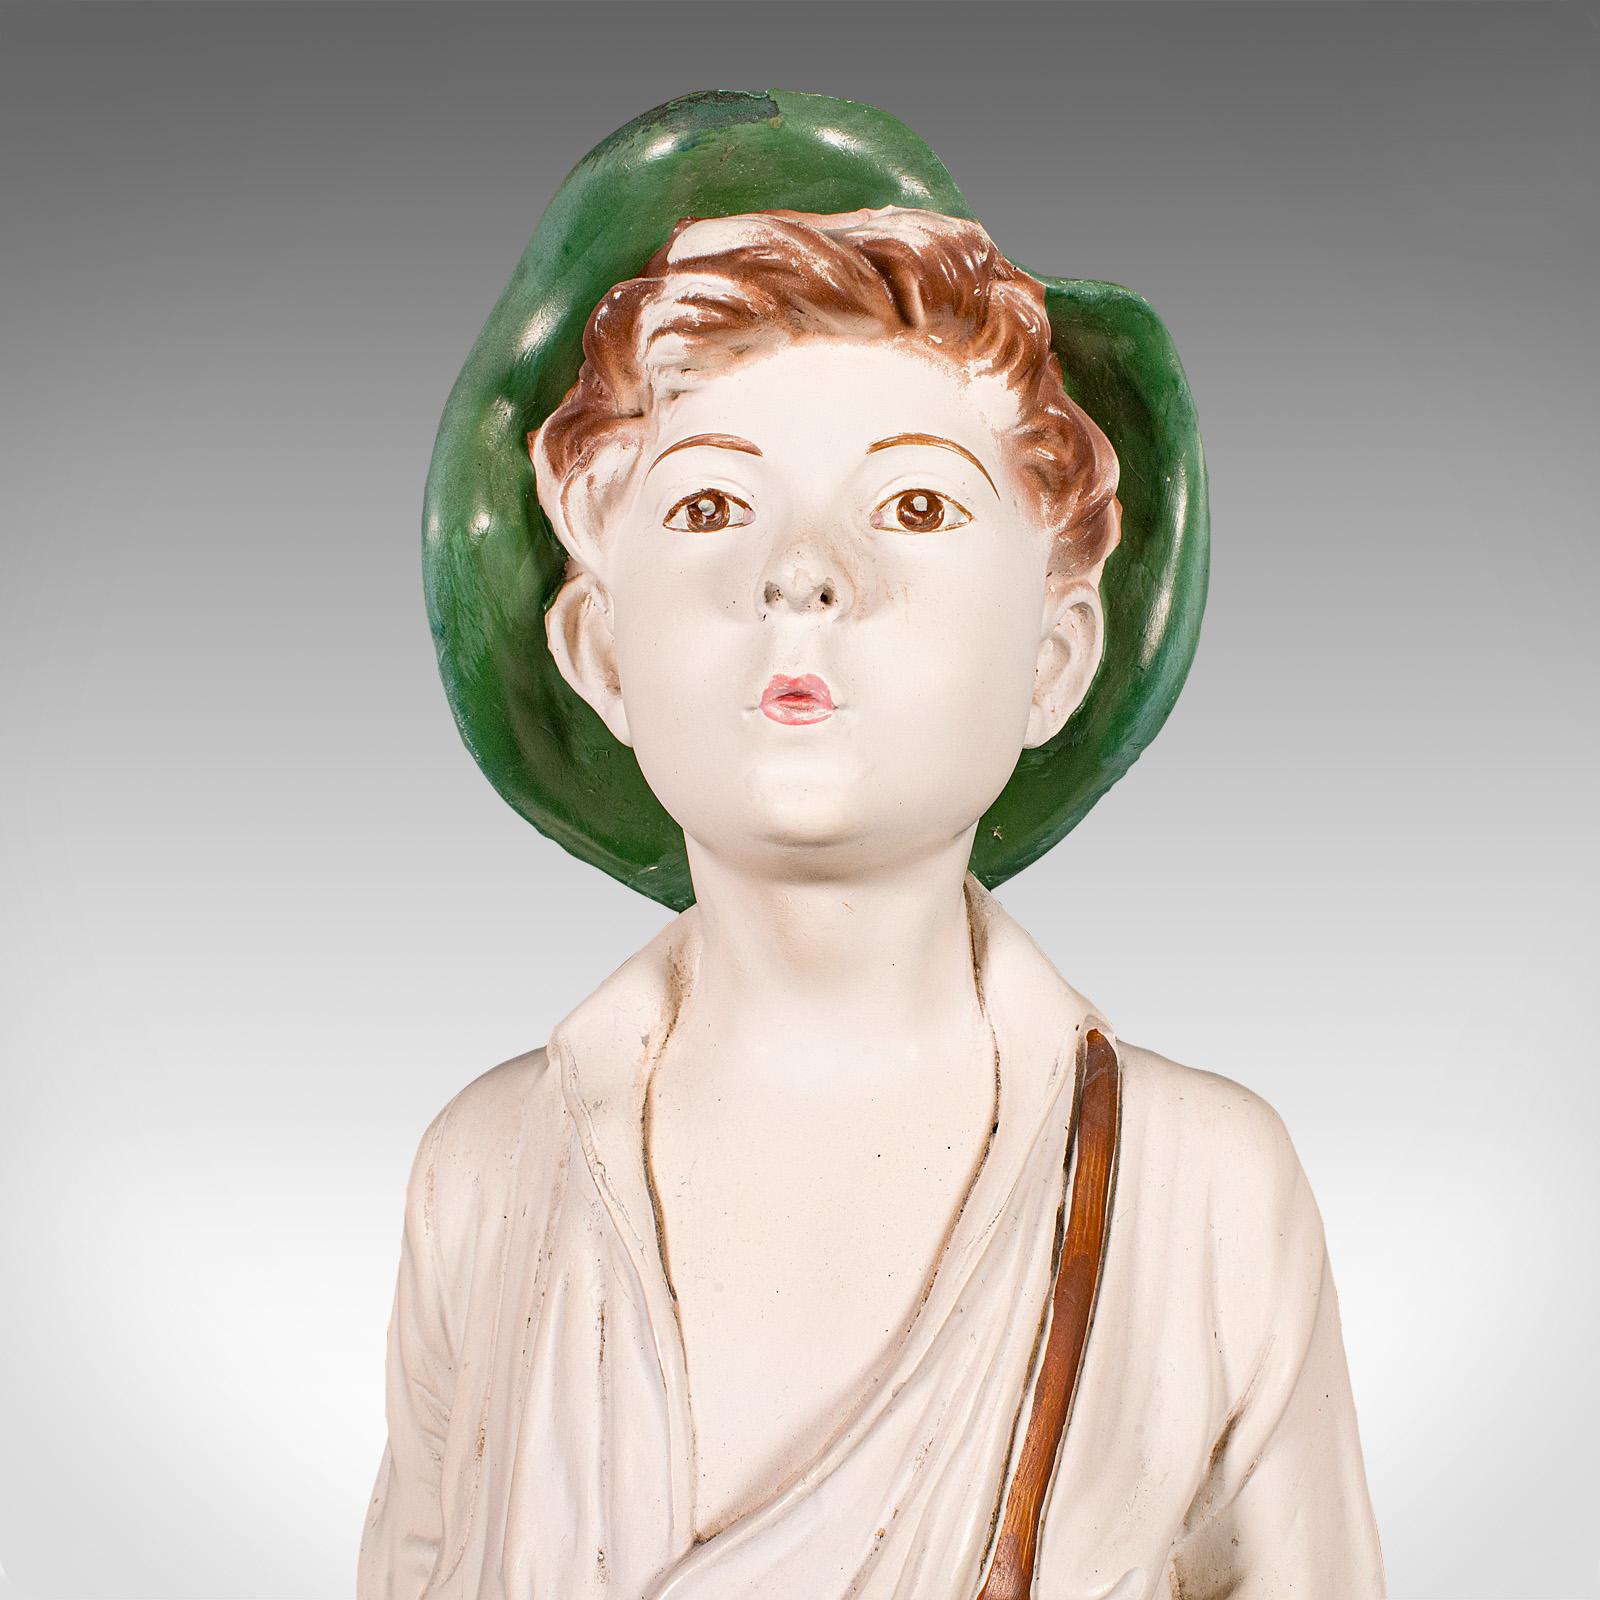 Vintage Whistling Boy Figure, English, Plaster Decor, Display Statue, Art Deco For Sale 1